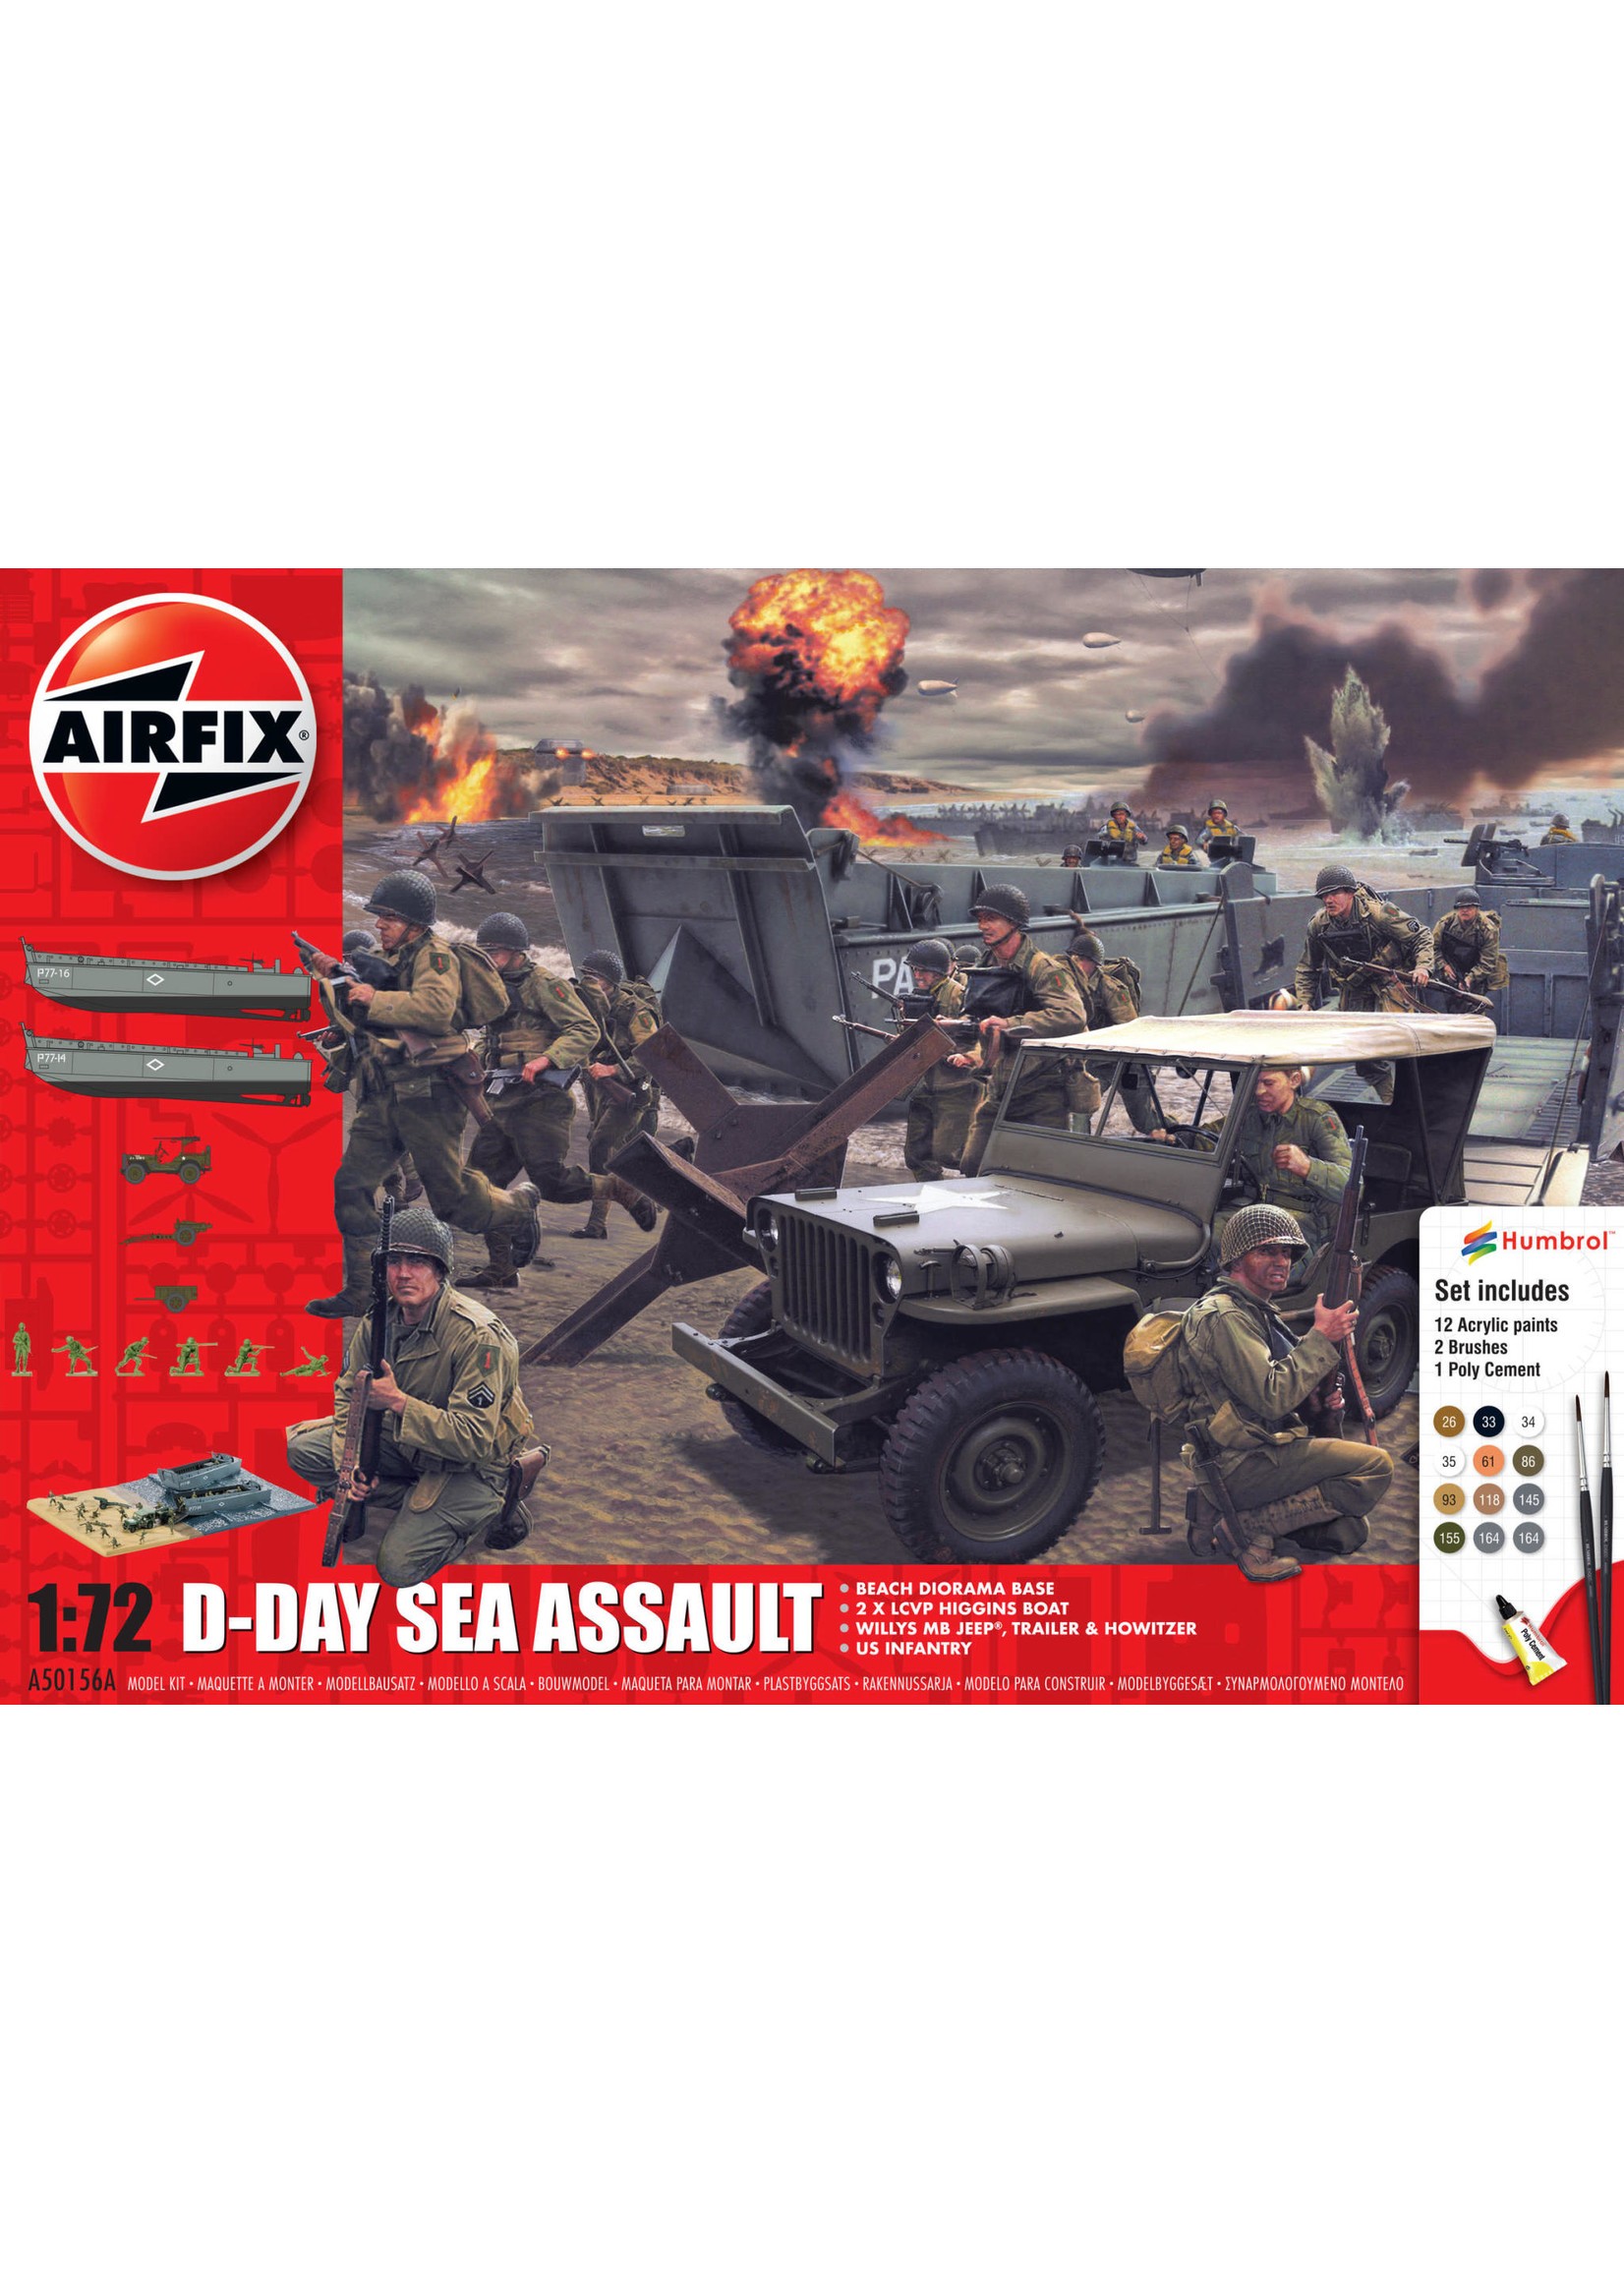 Airfix D-Day sea assault - 75th anniversary set - 1/72